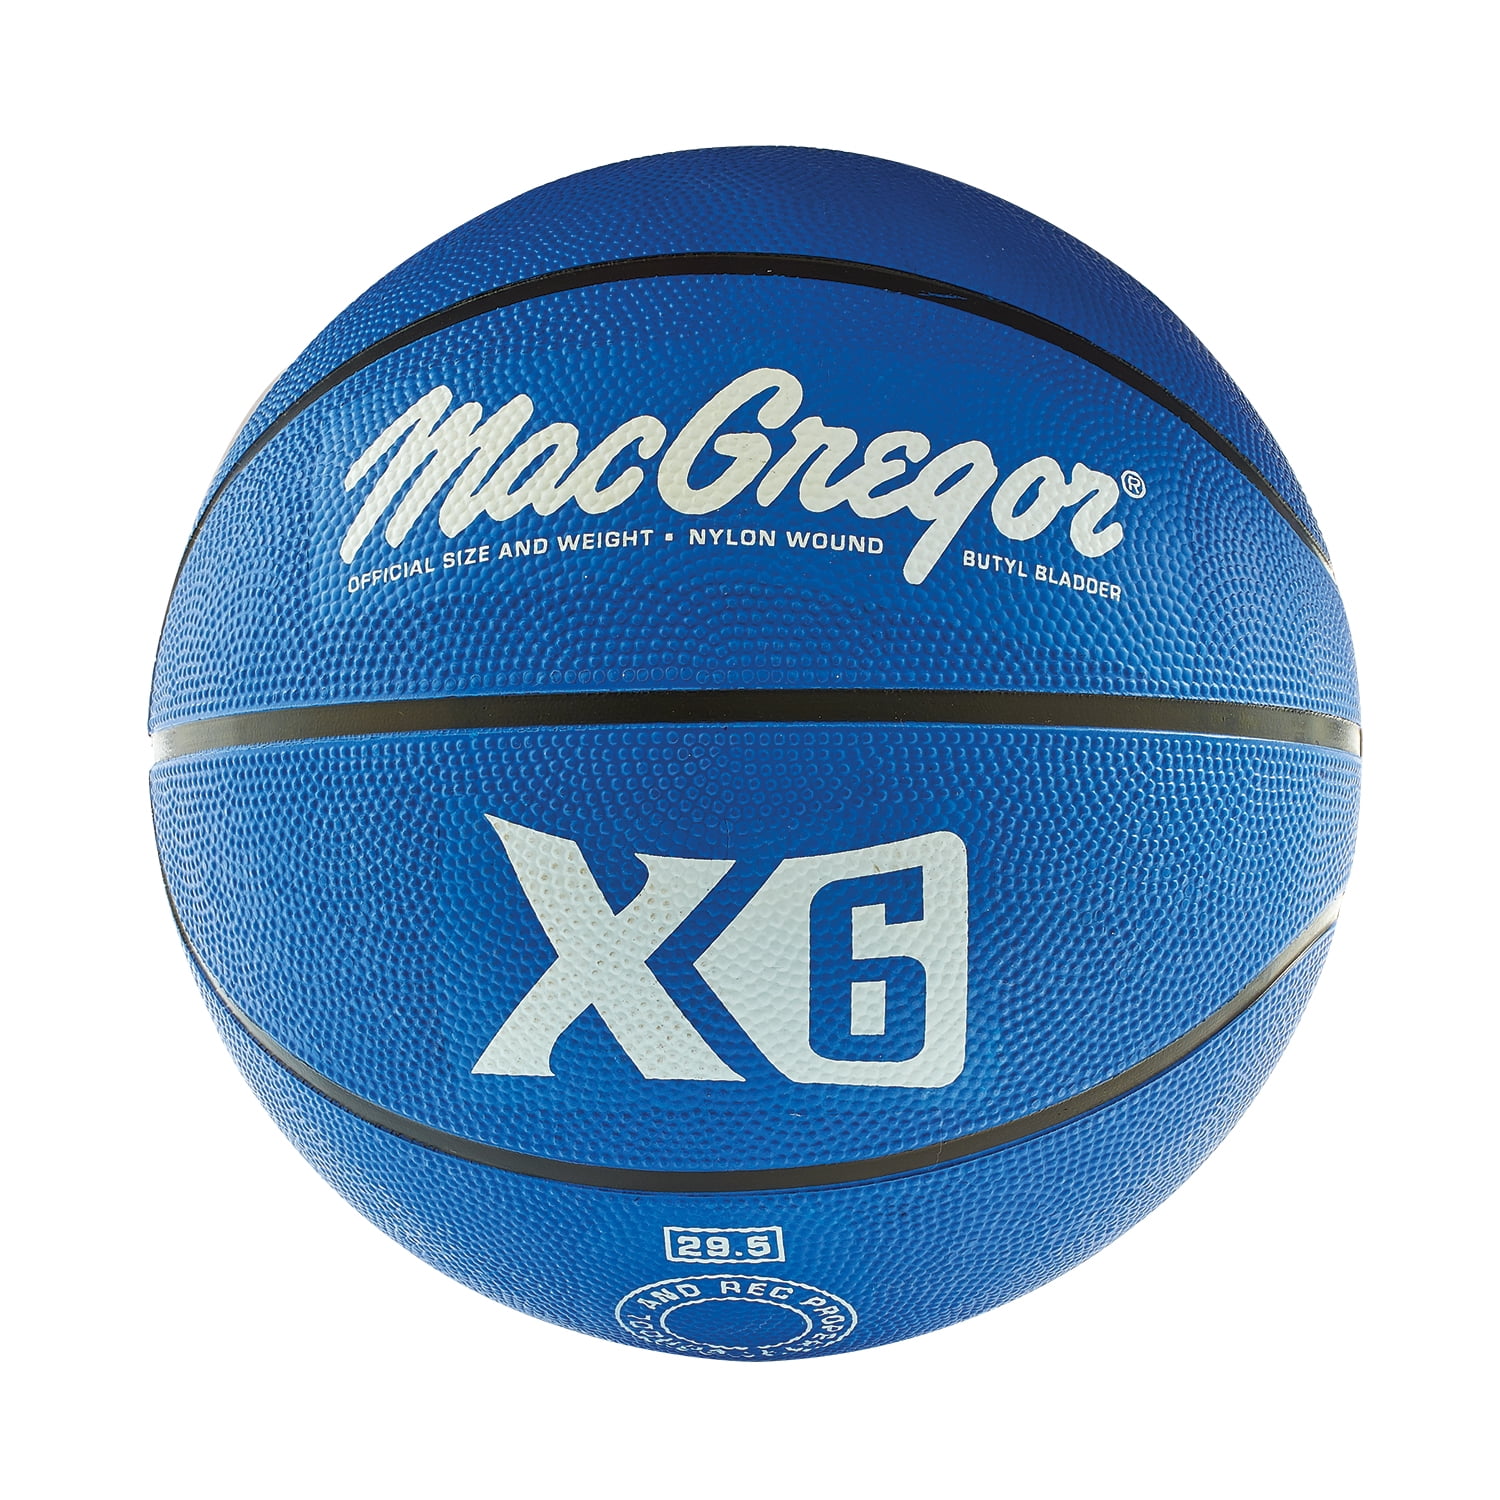 MacGregor® Official size Basketball w/ YMCA Logo 29.5" 